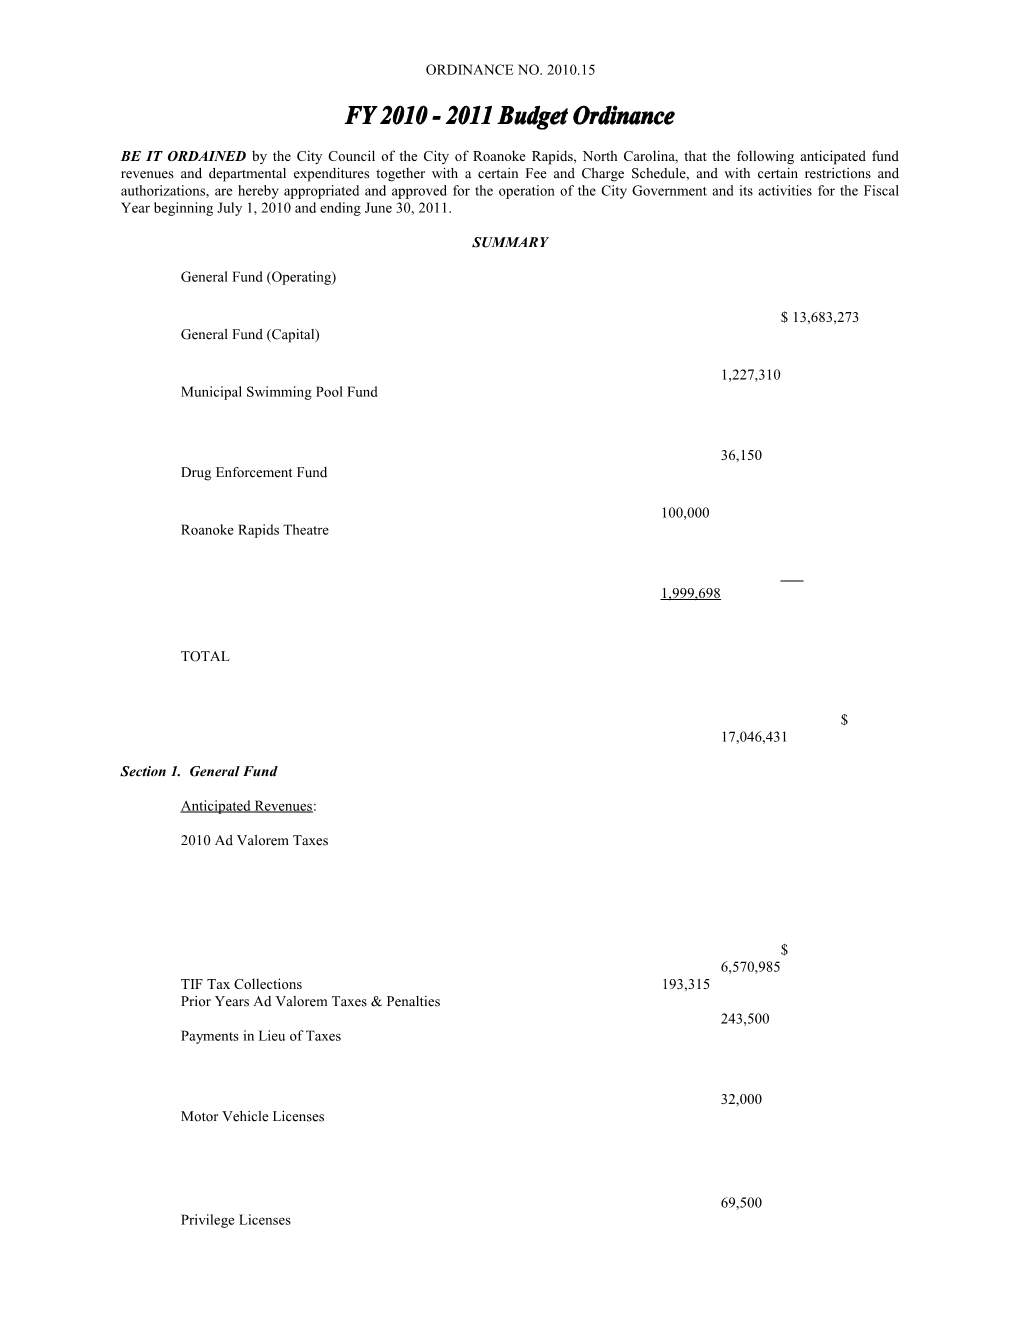 General Fund (Operating) $ 13,683,273